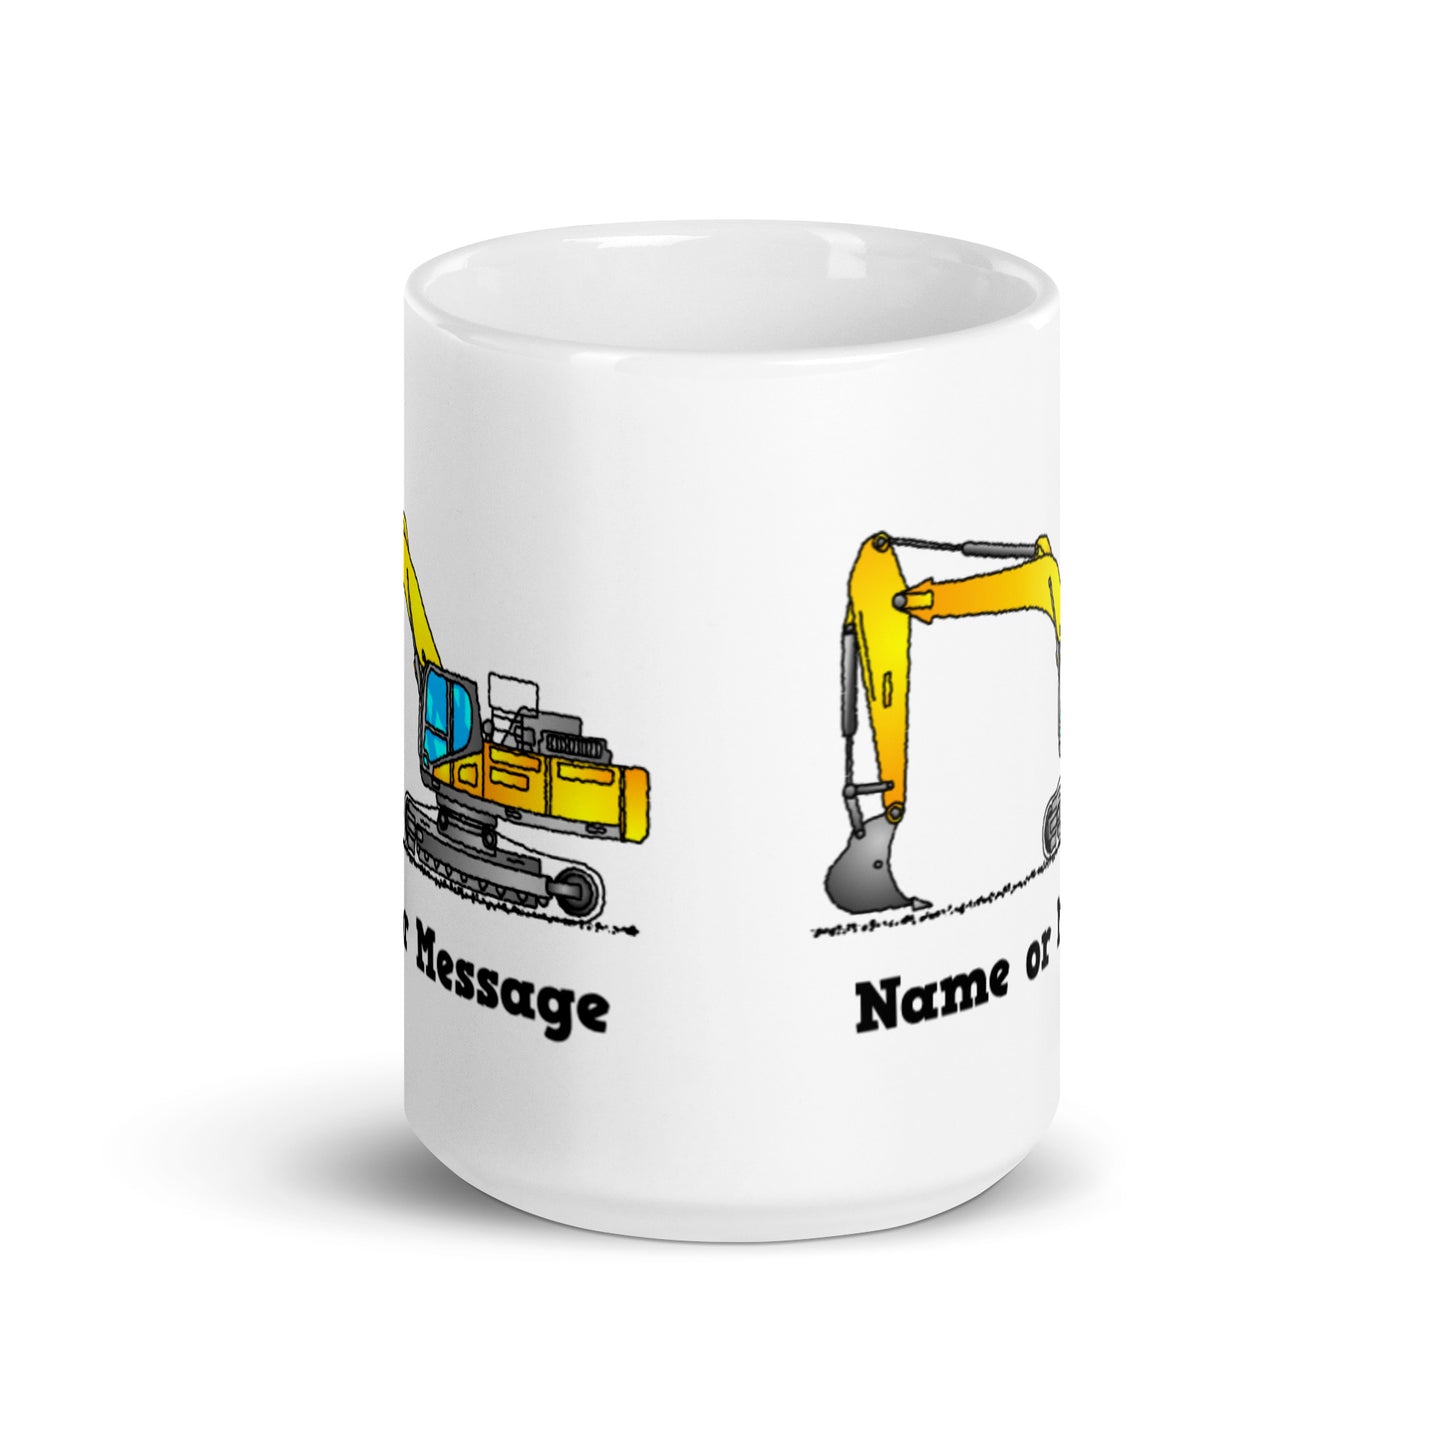 Personalized Yellow Excavator Mug